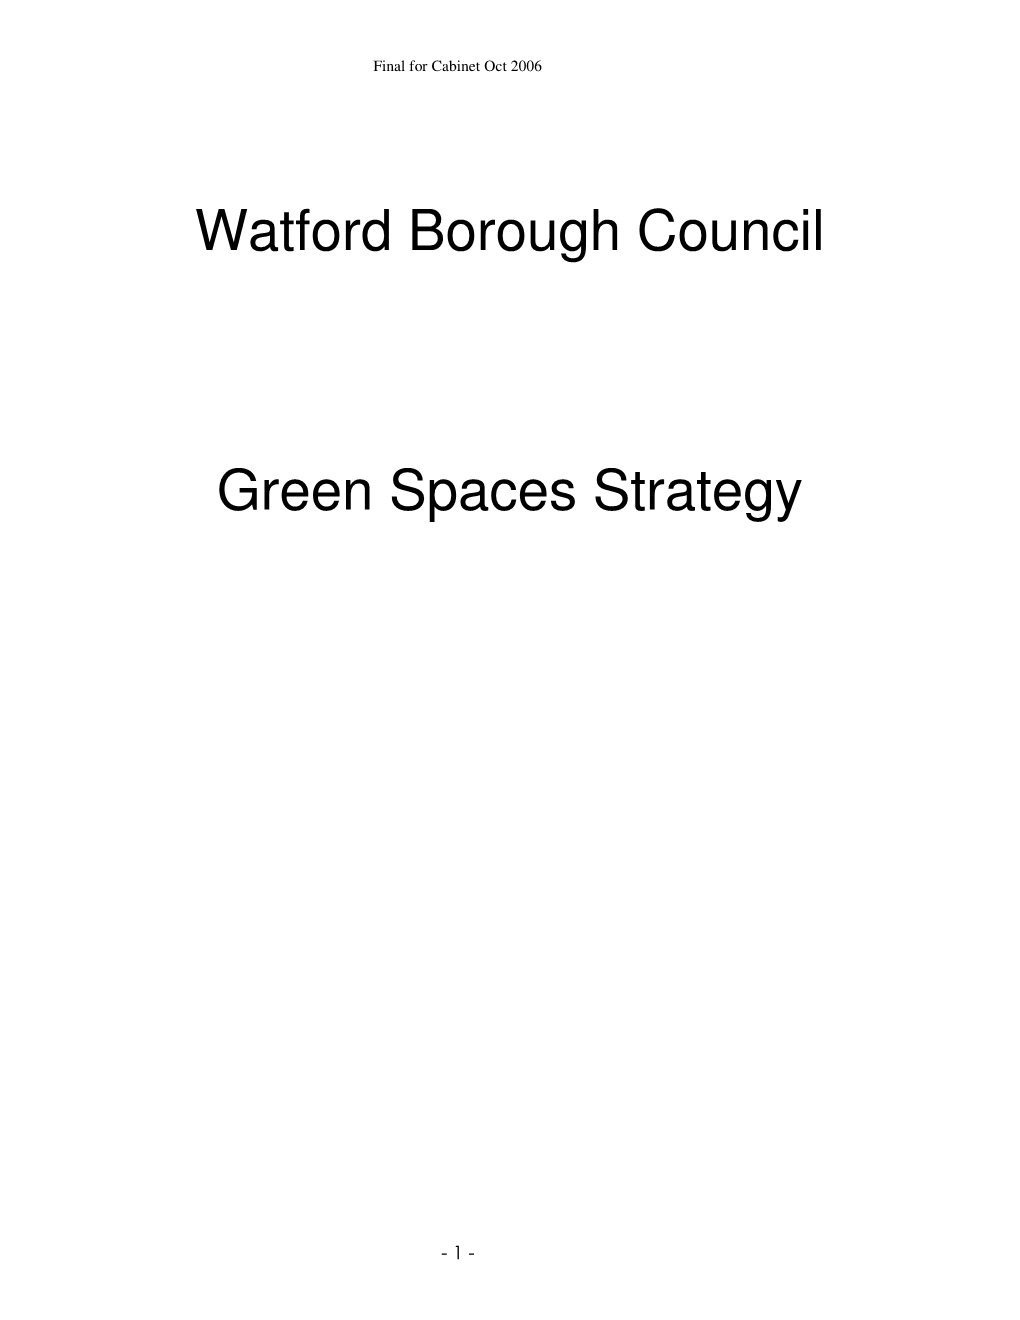 Watford Borough Council Green Spaces Strategy